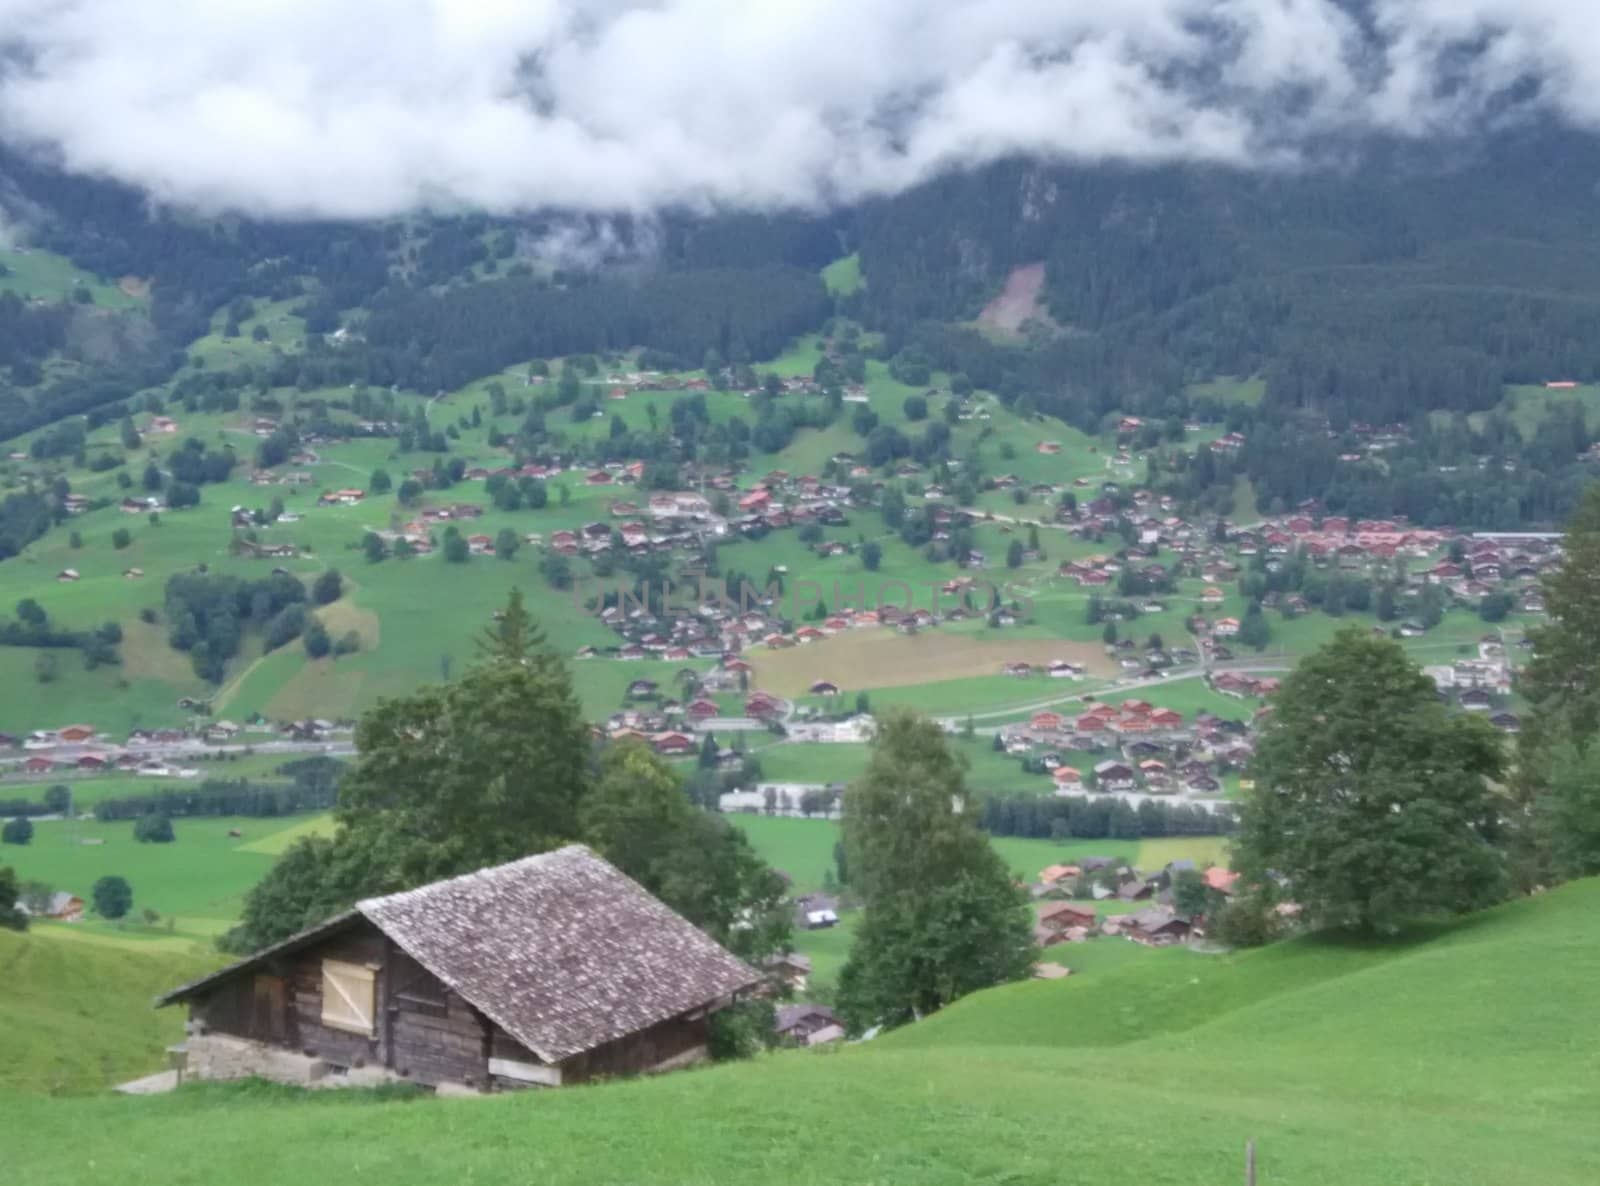 Landscape of an European village